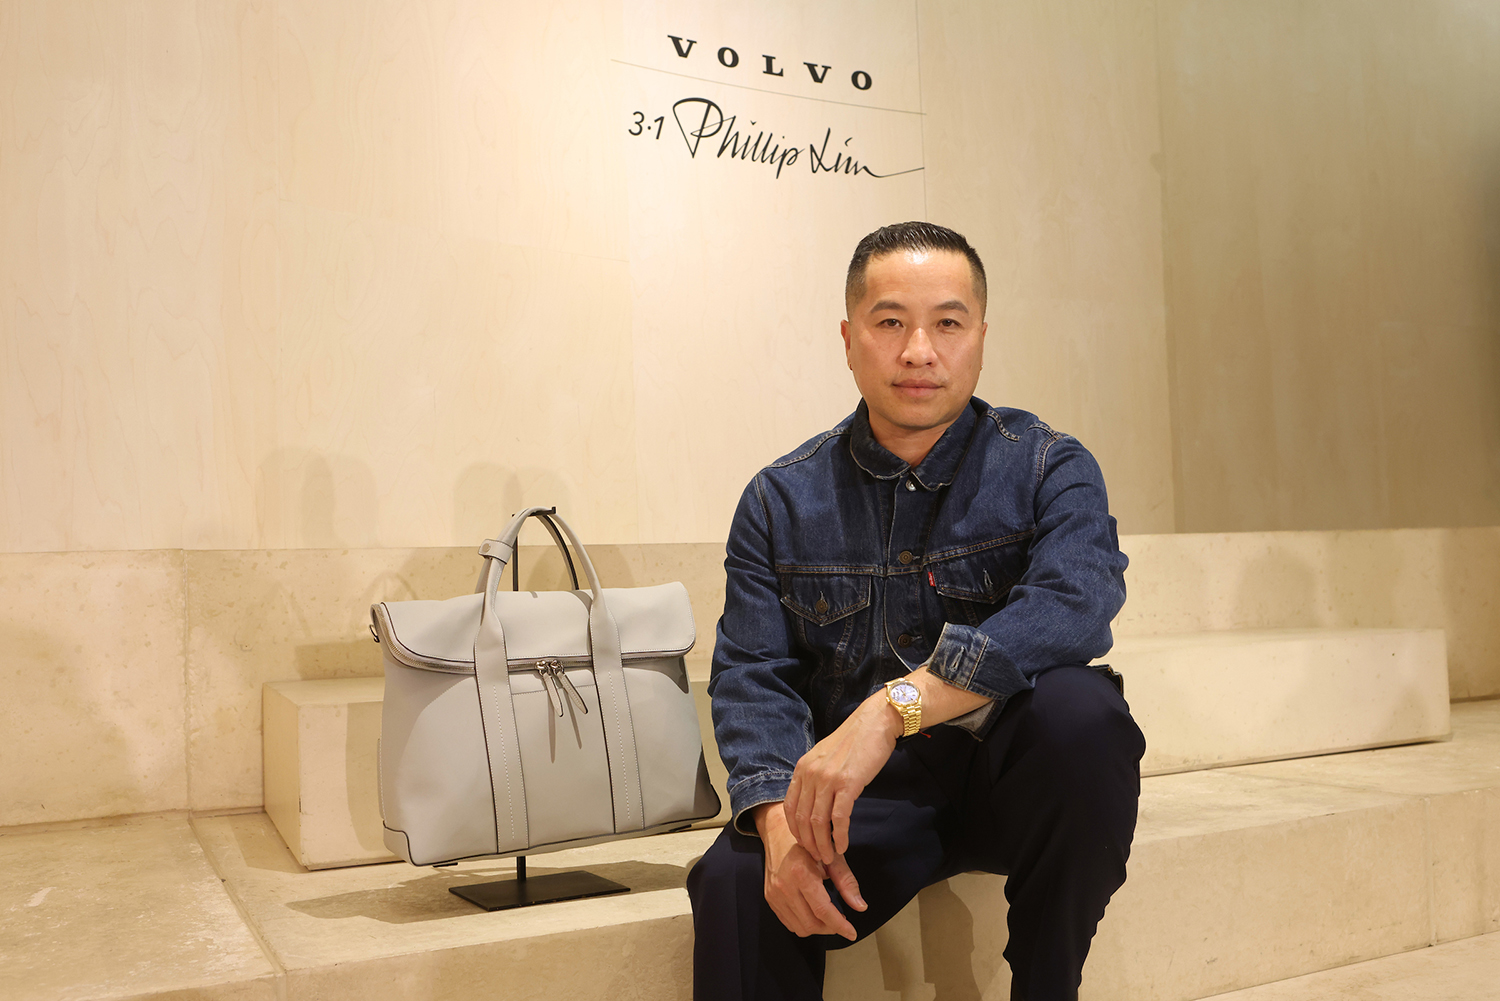 Volvo x 3.1 Phillip Lim Collaborate on Weekender Bag